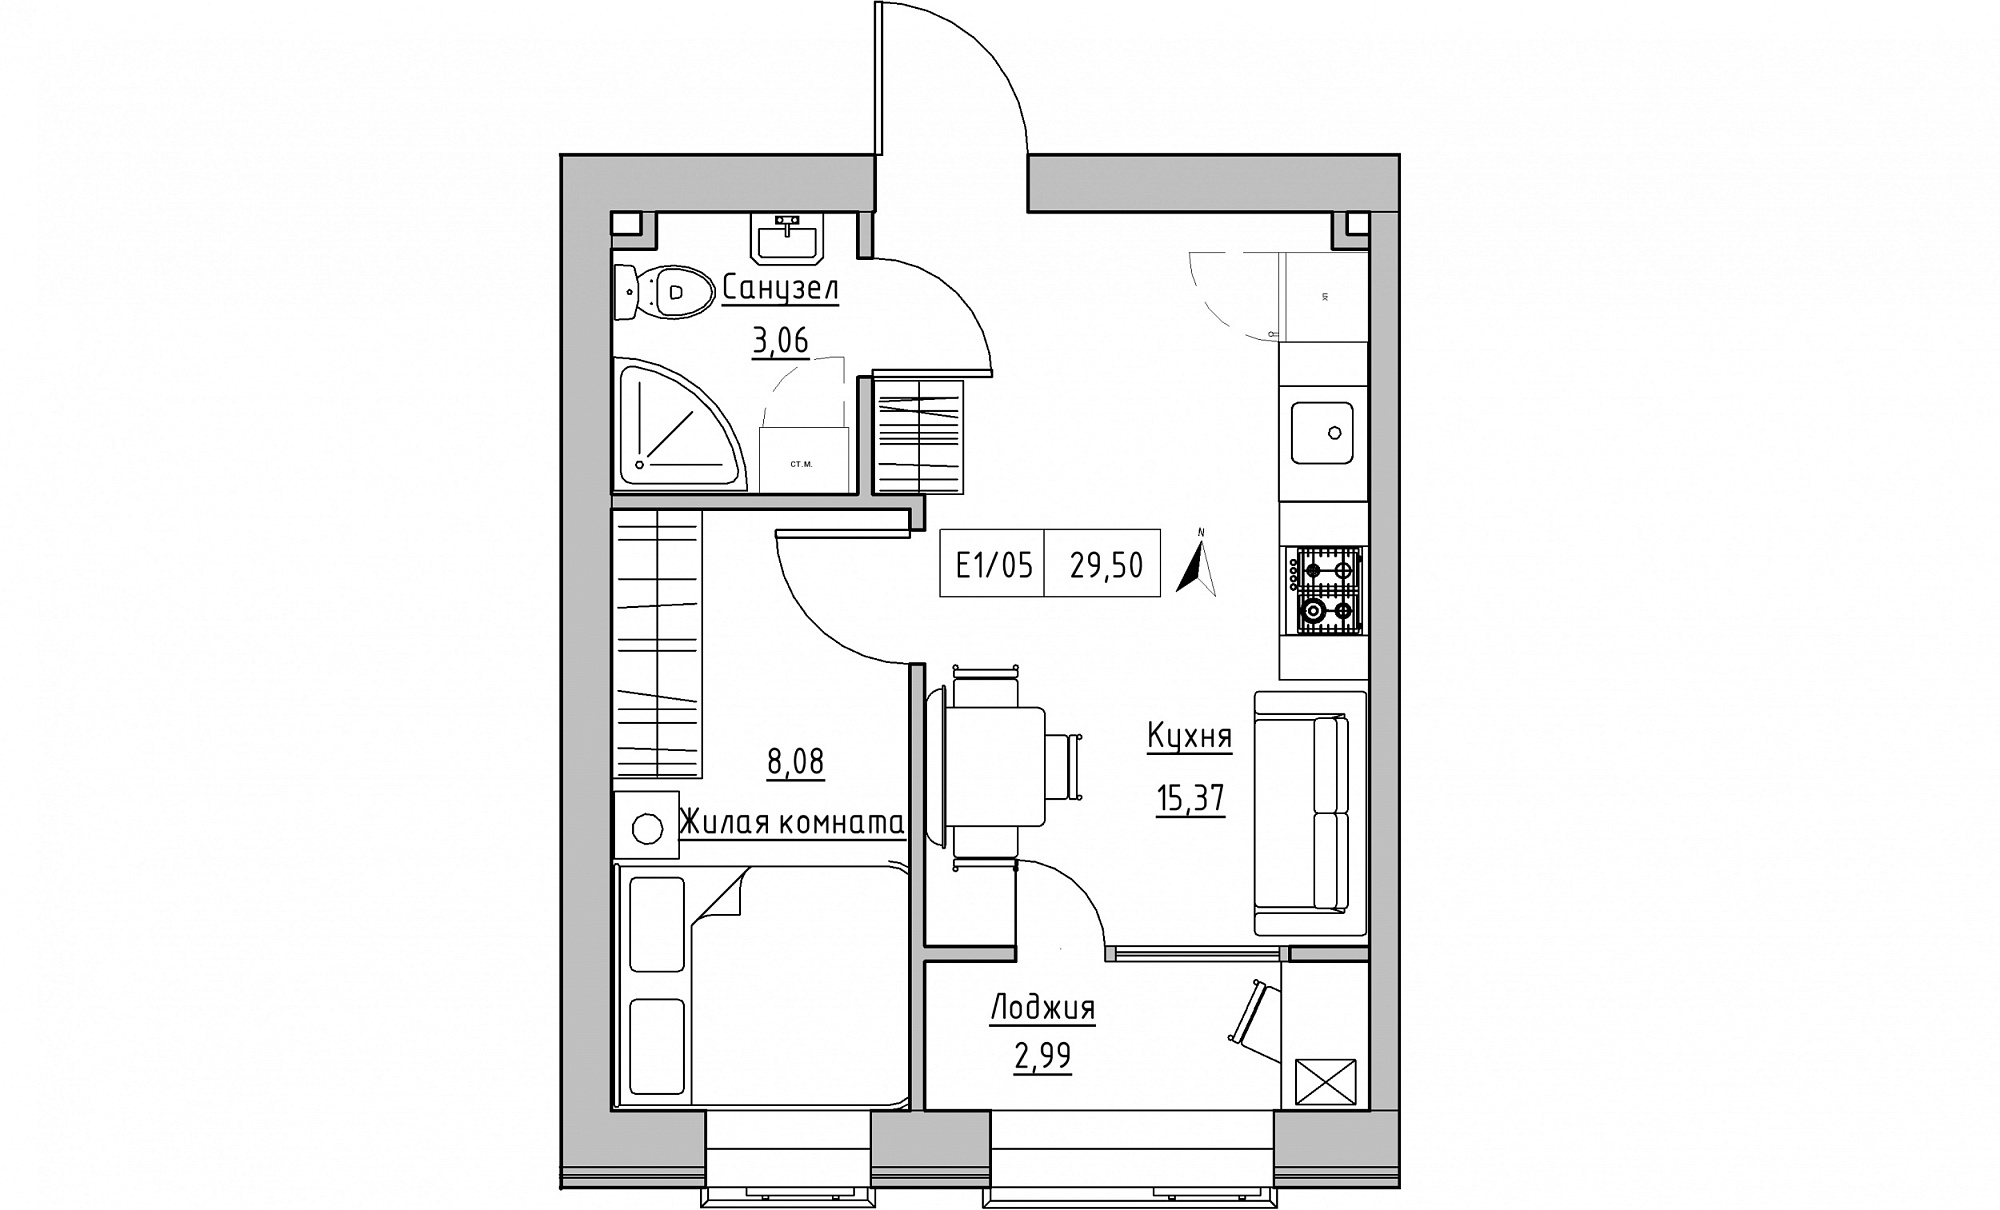 Planning 1-rm flats area 29.5m2, KS-015-03/0010.